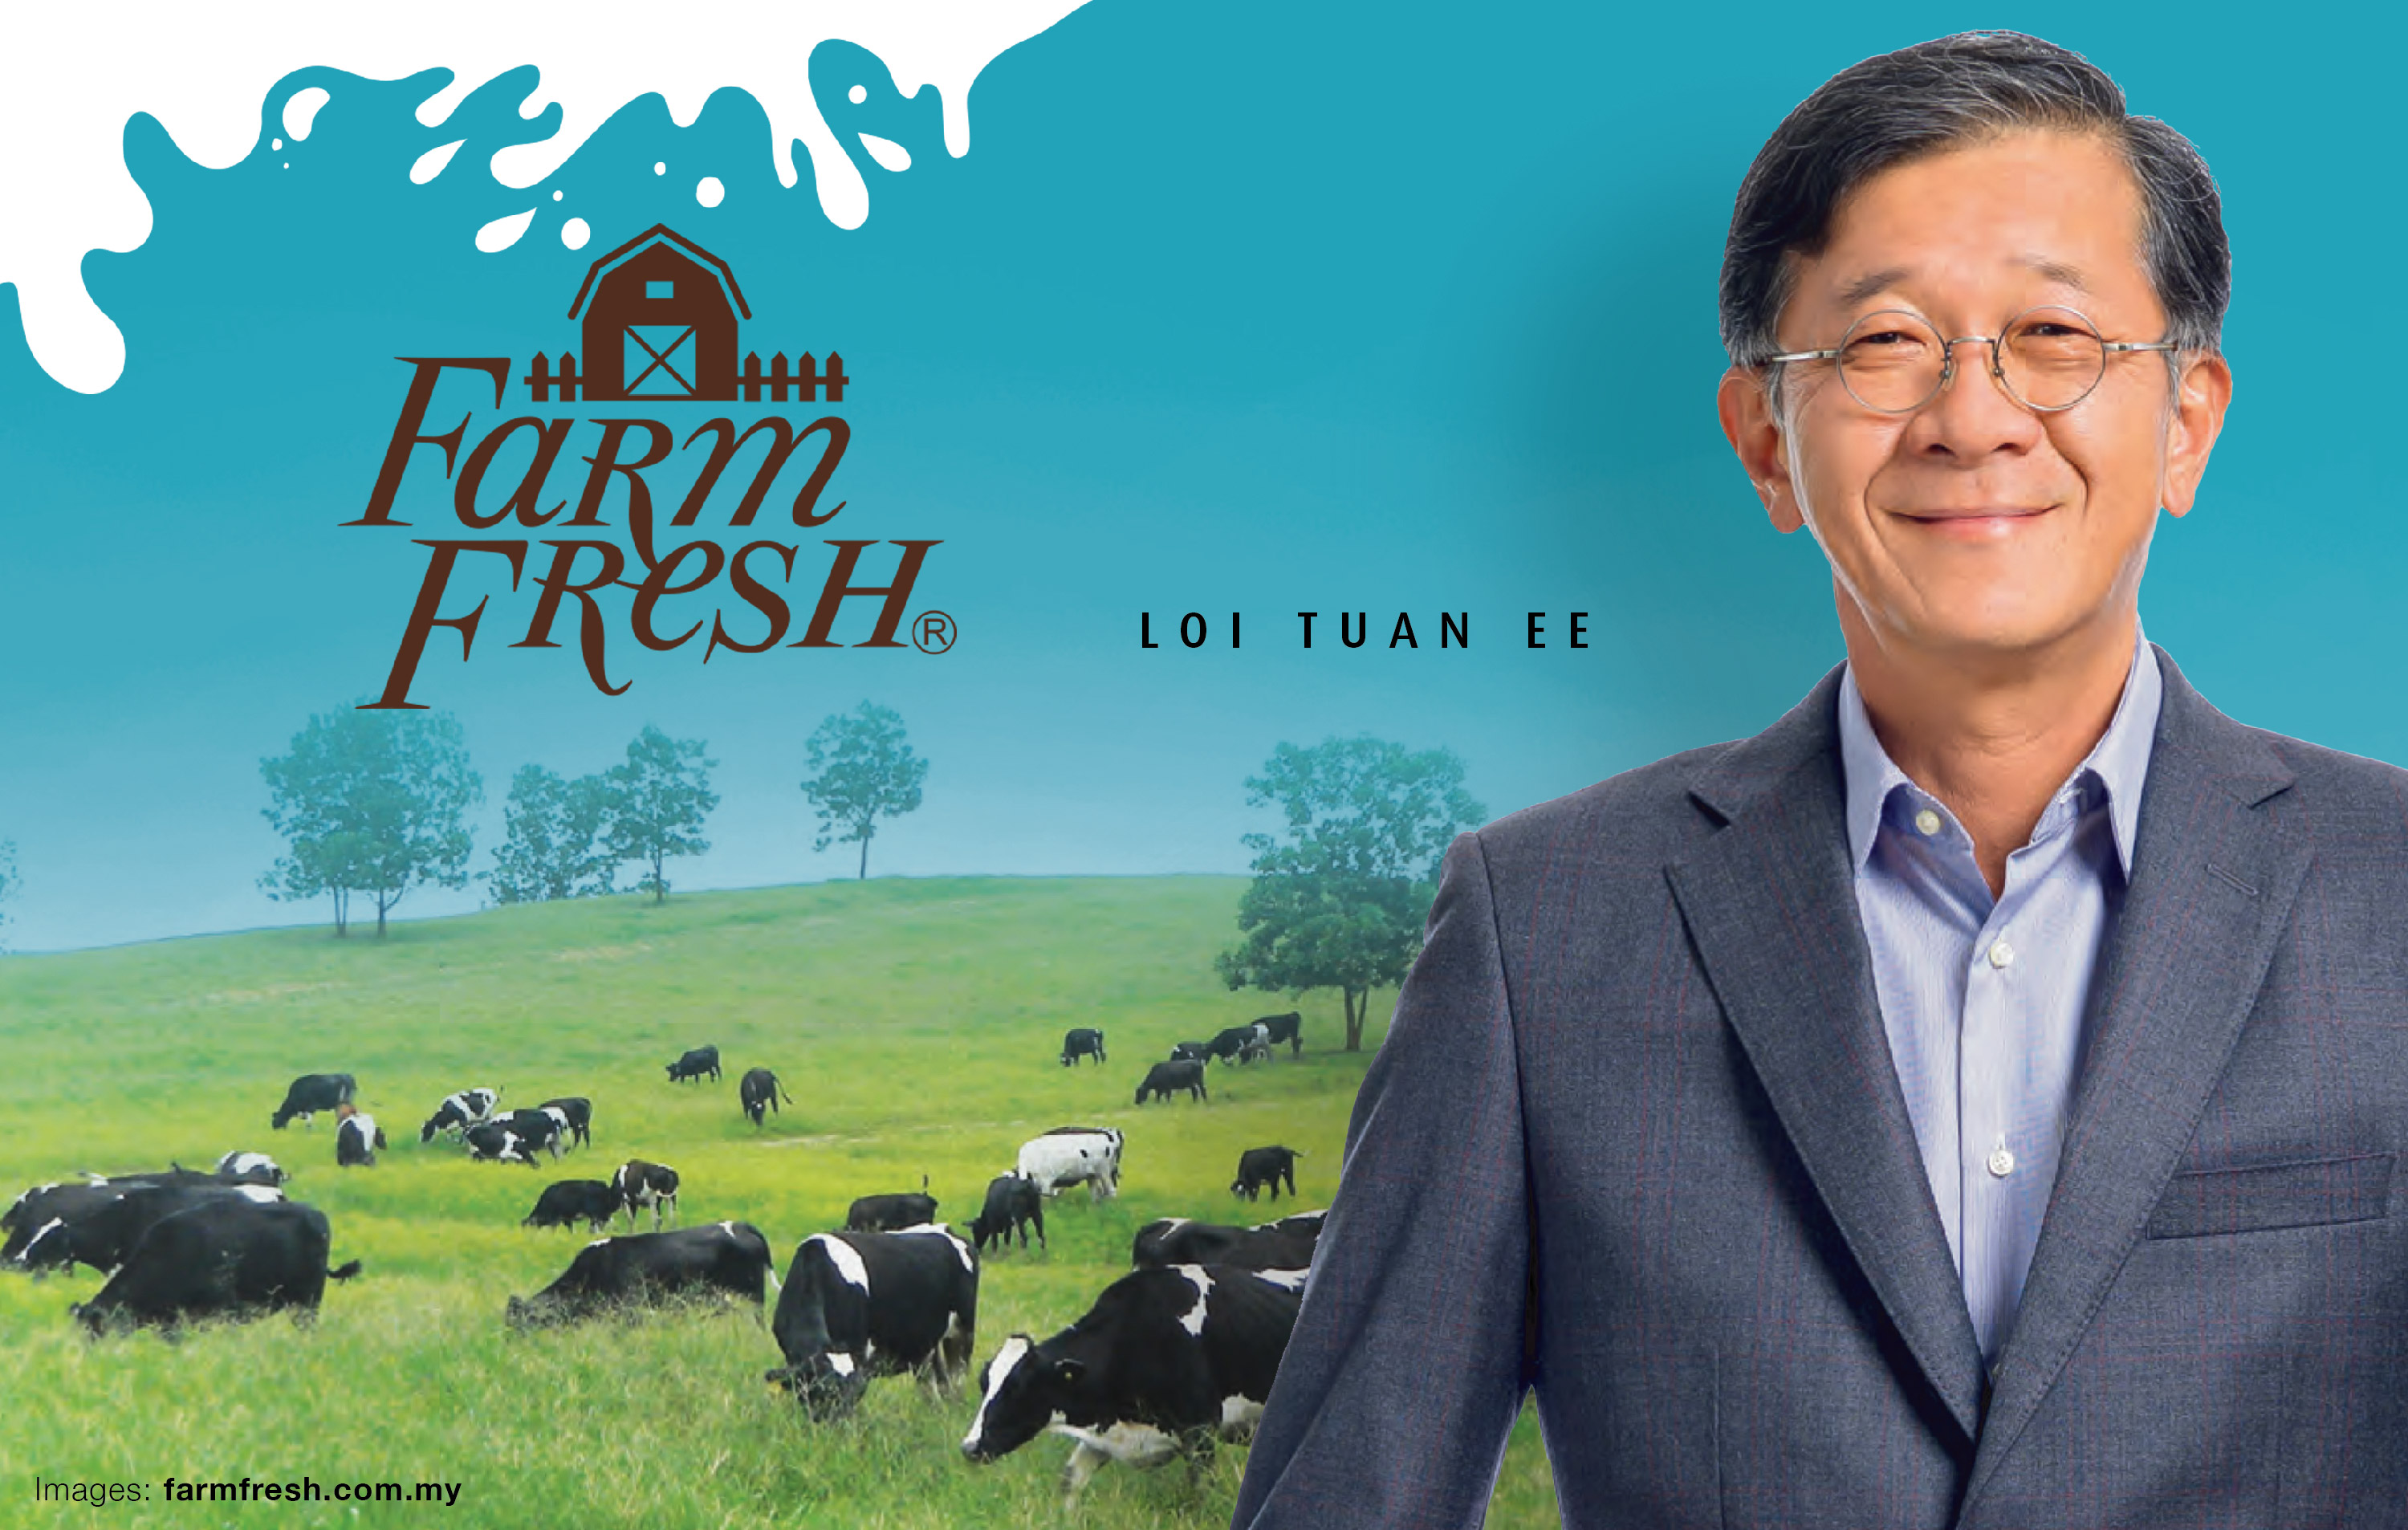 Malaysia's Milkman, Loi Tuan Ee - an inspiring Agri-Entrepreneur